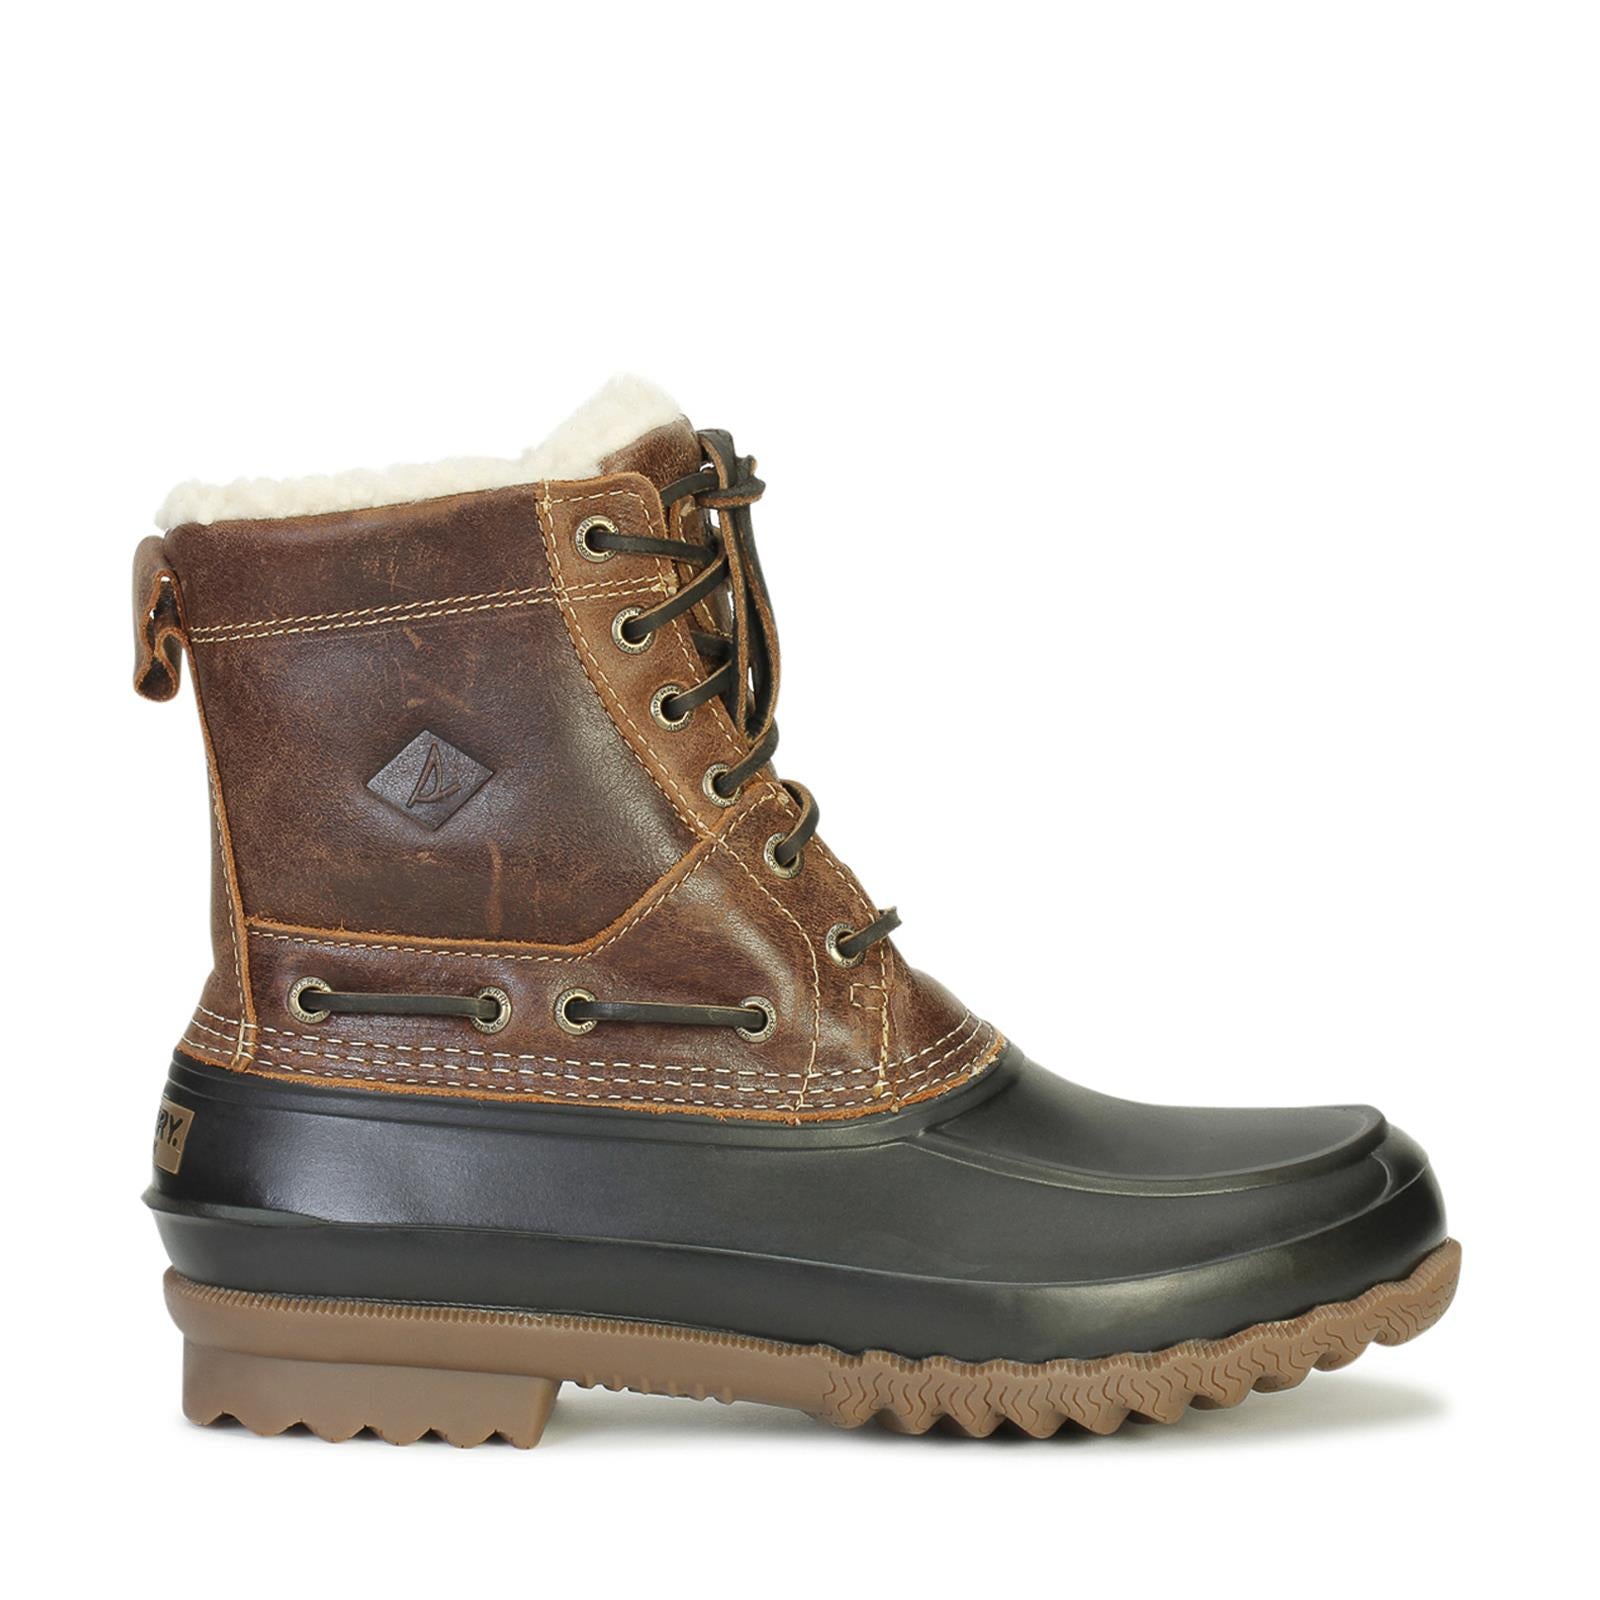 sperry-top-sider-mens-decoy-shearling-boot-waterproof-brown-sts14469-main